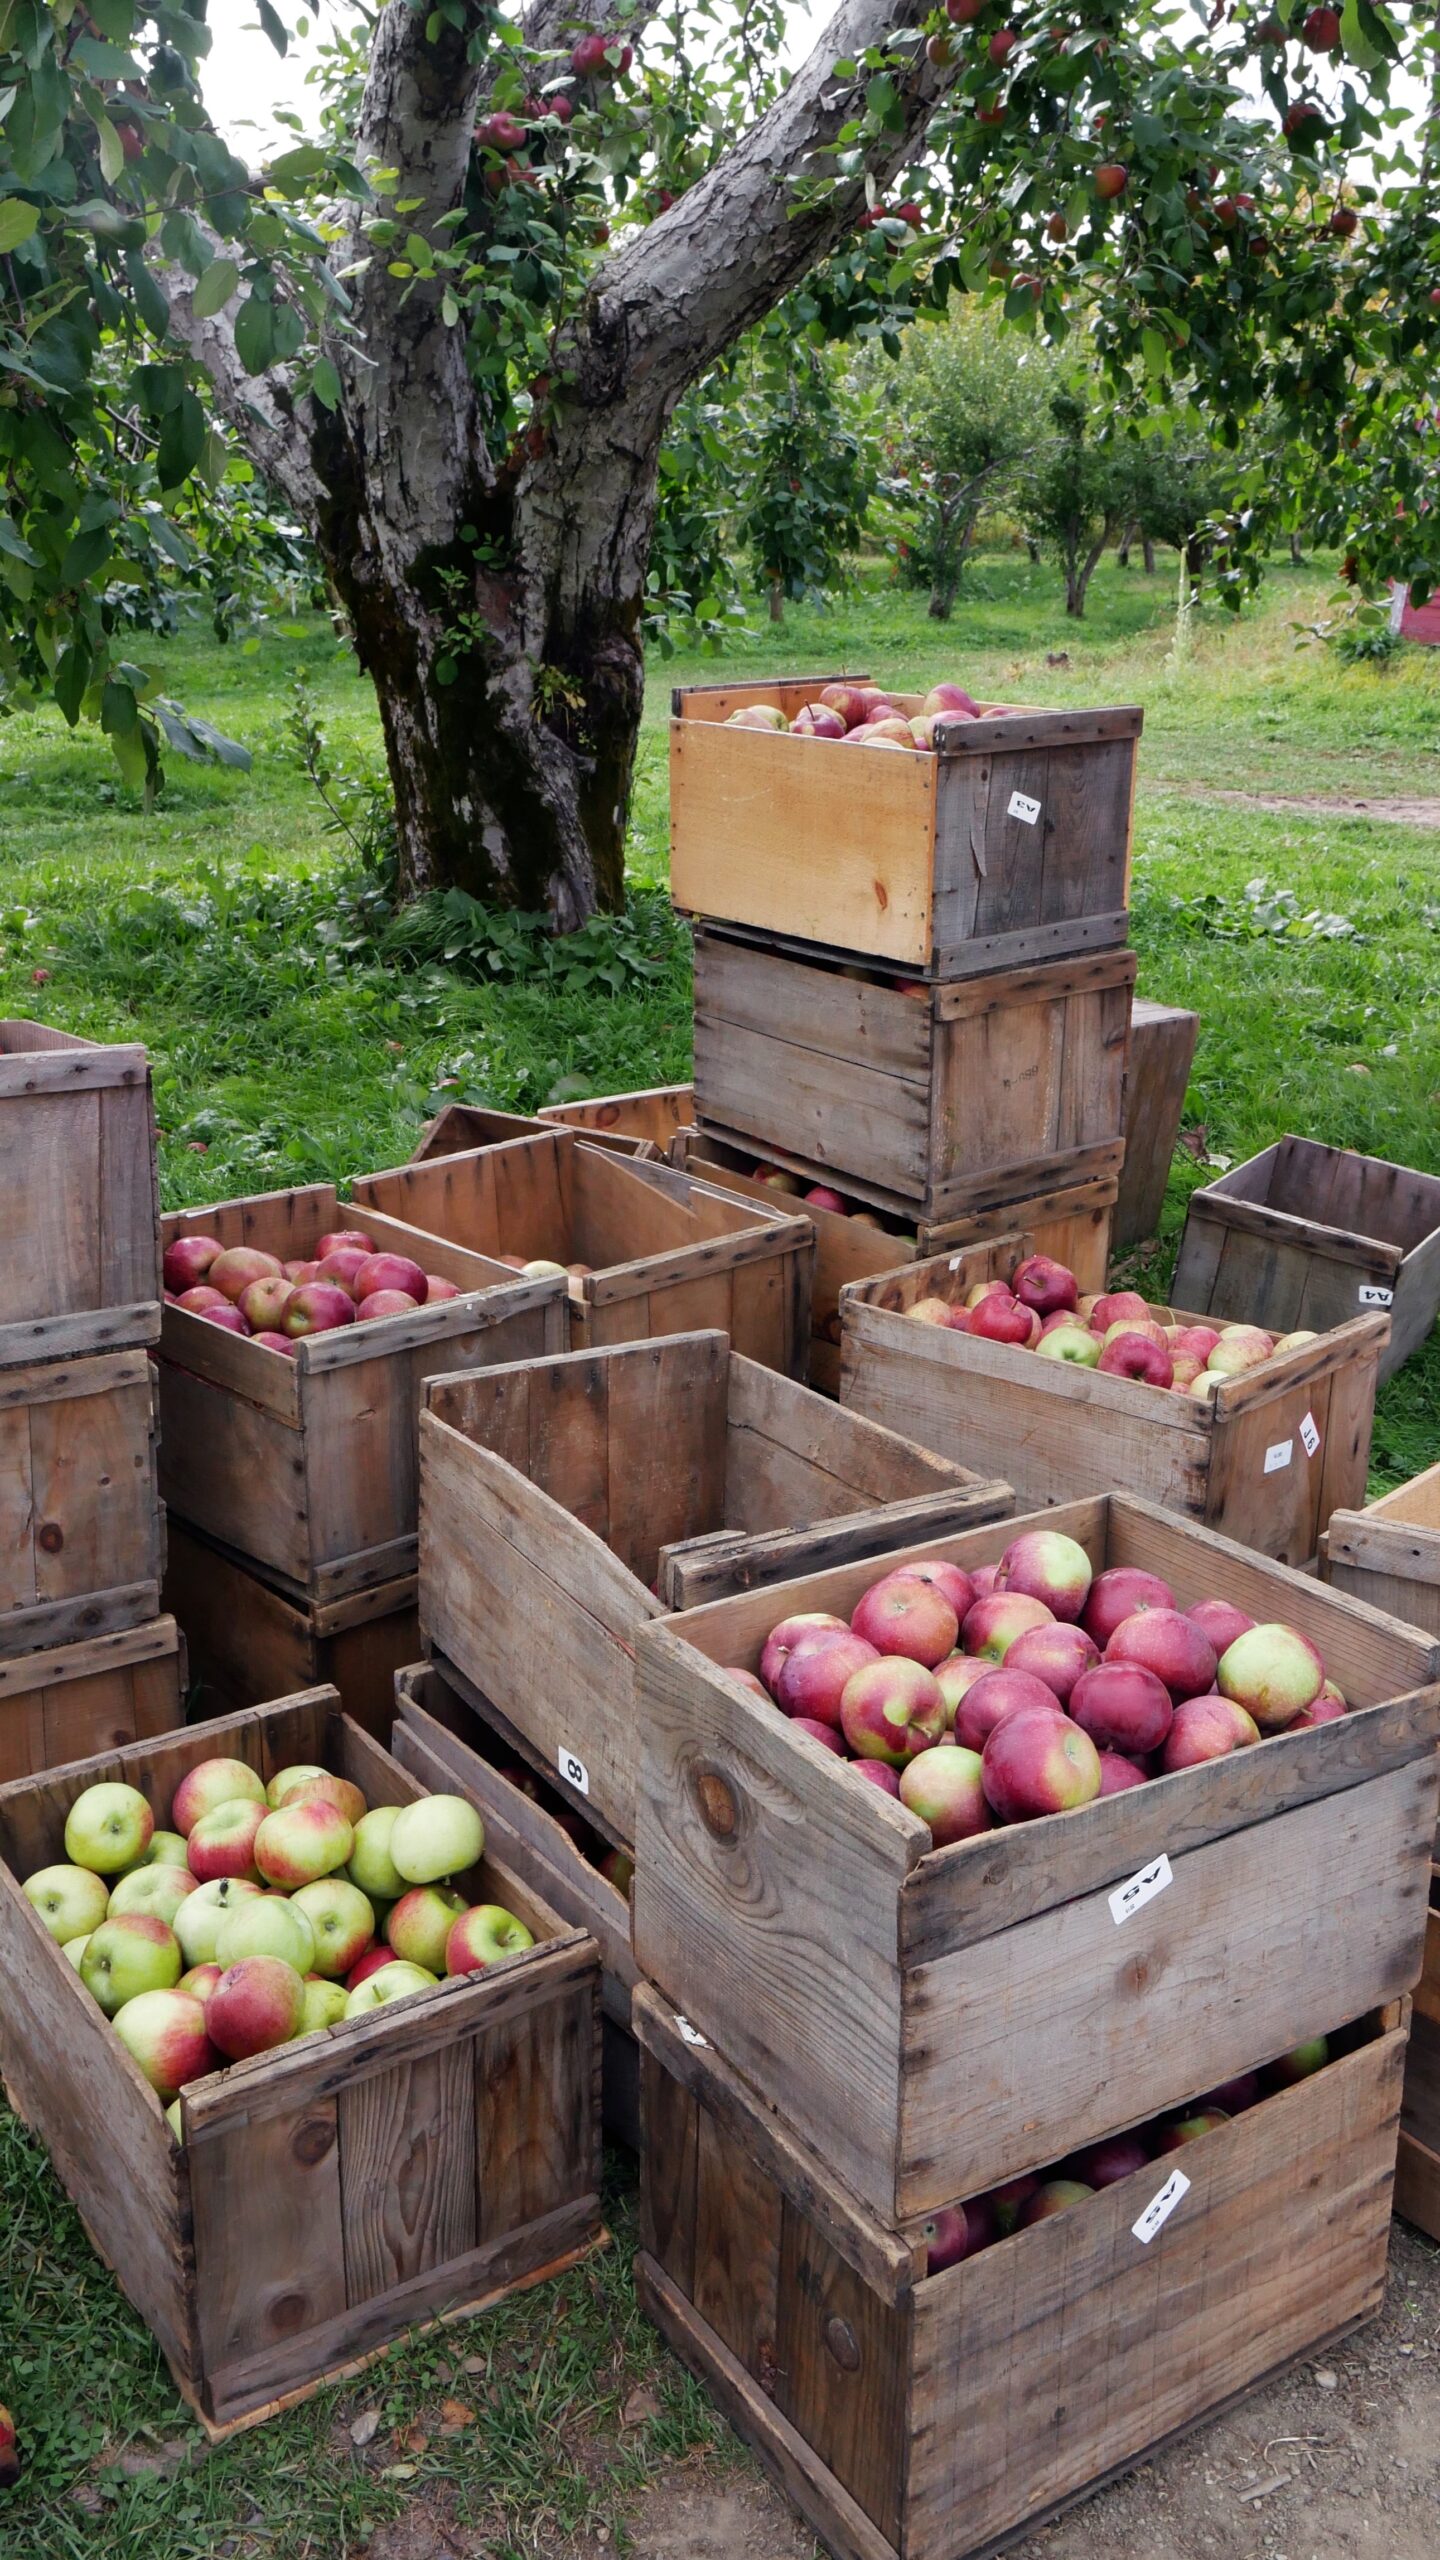 Polish Apples | https://fruitsauction.com/